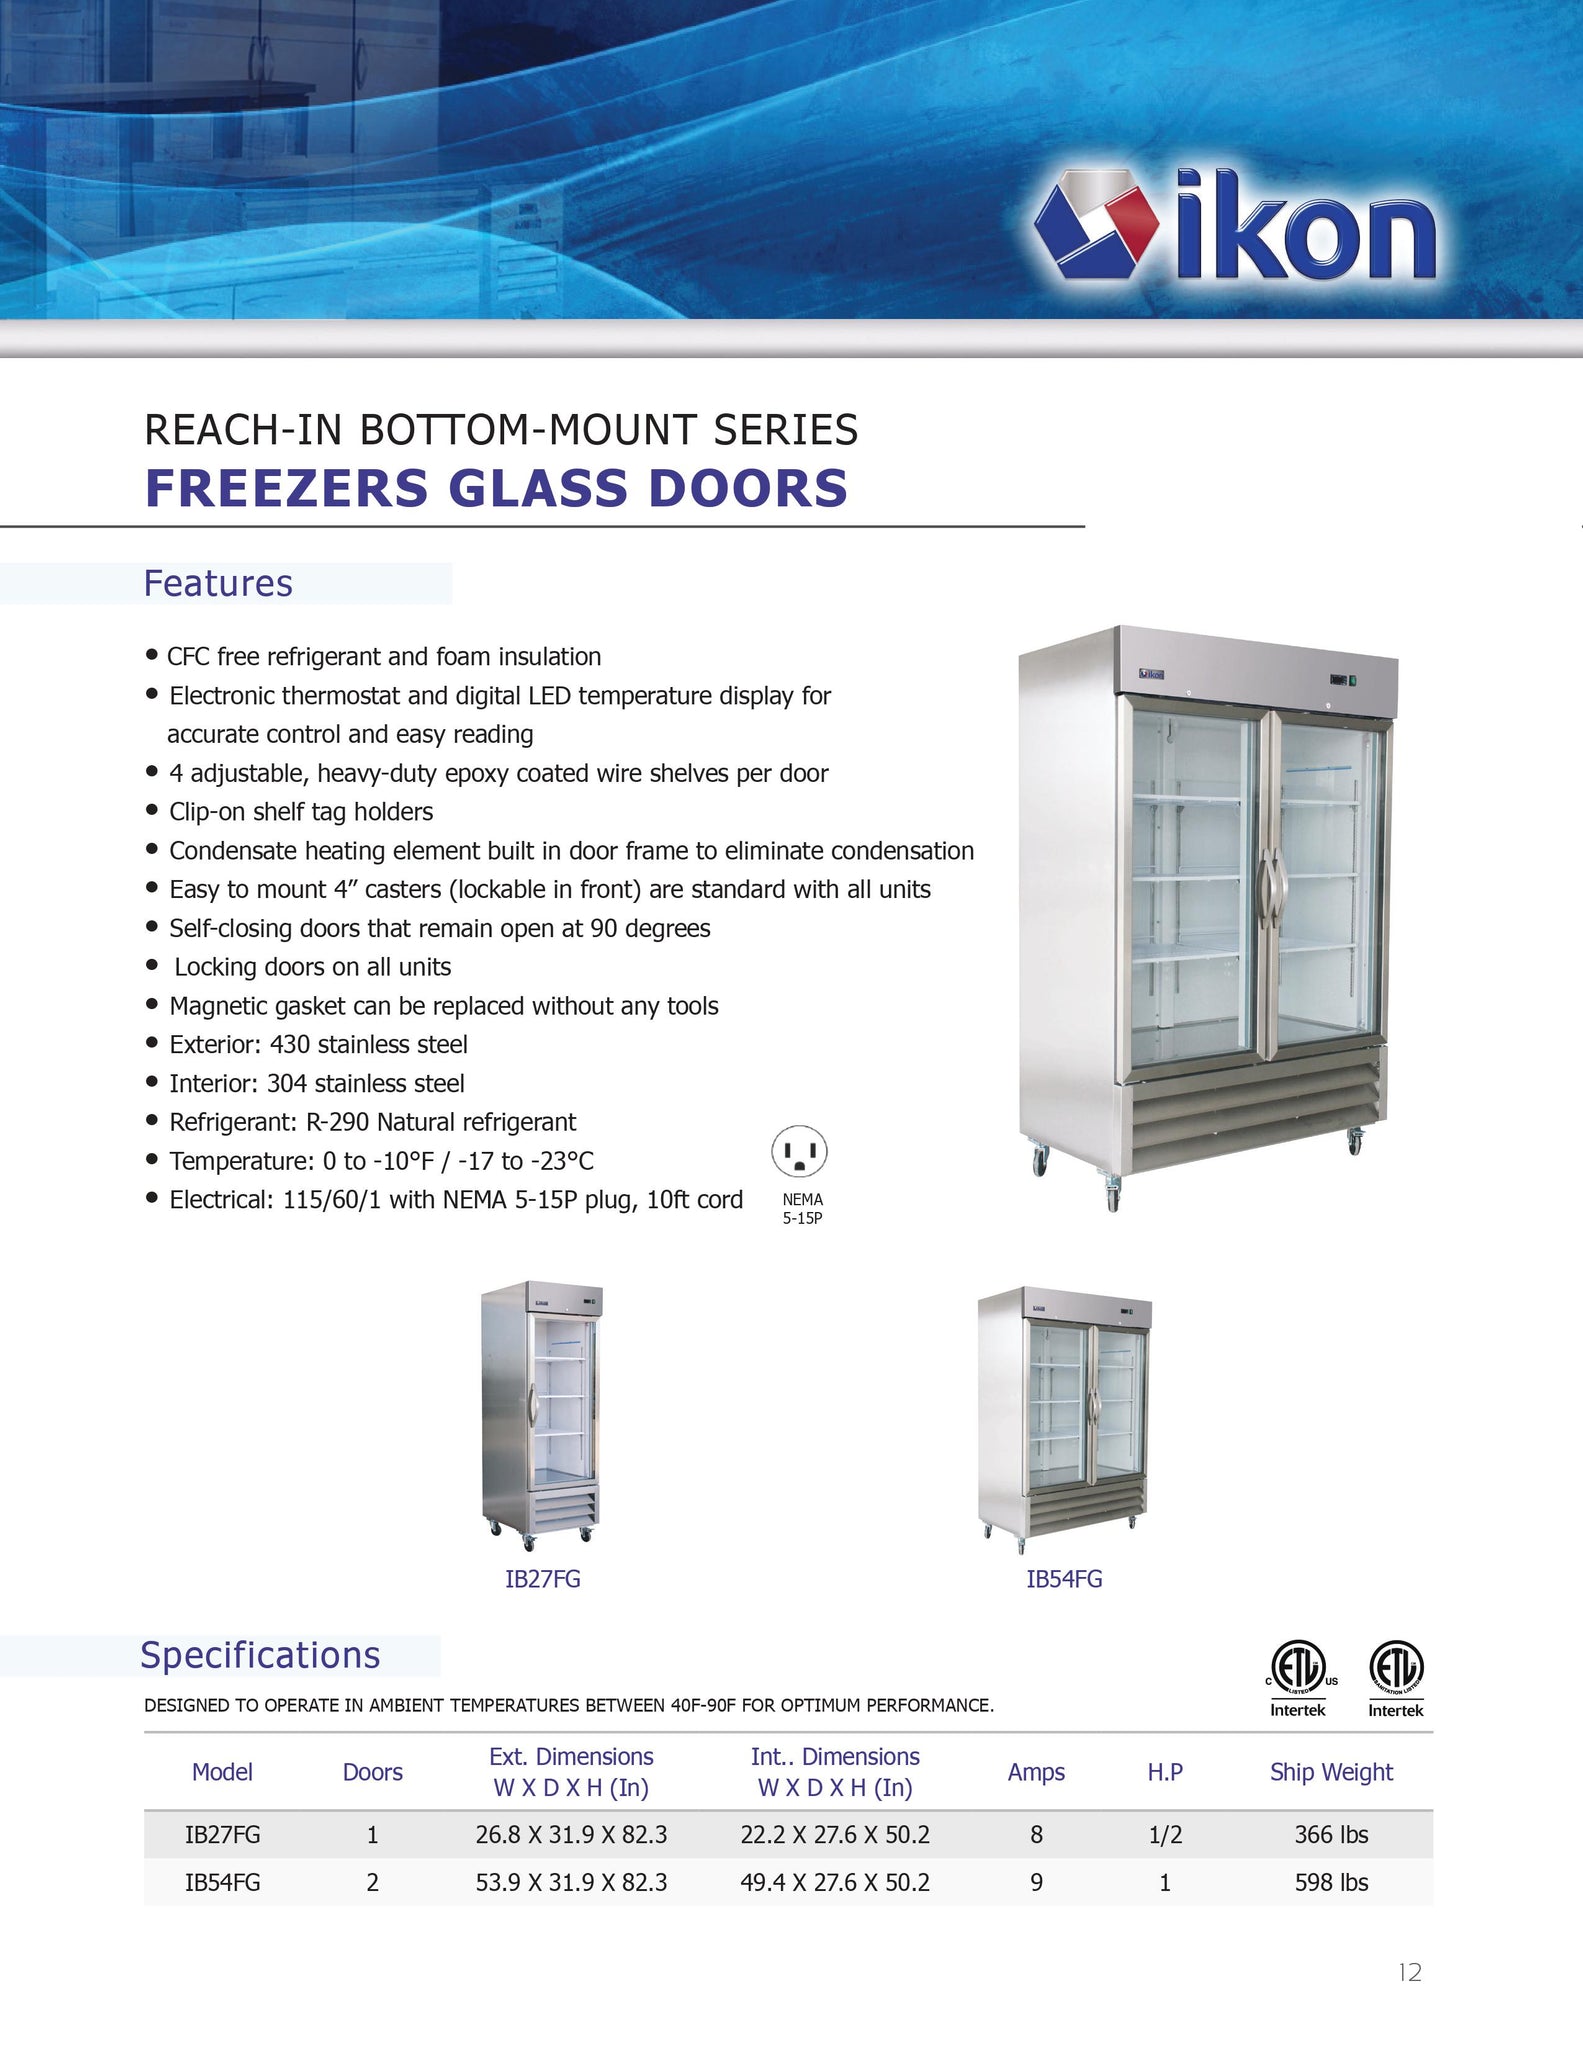 Ikon IB54FG 54" Two Section Glass Door Reach-In Freezer